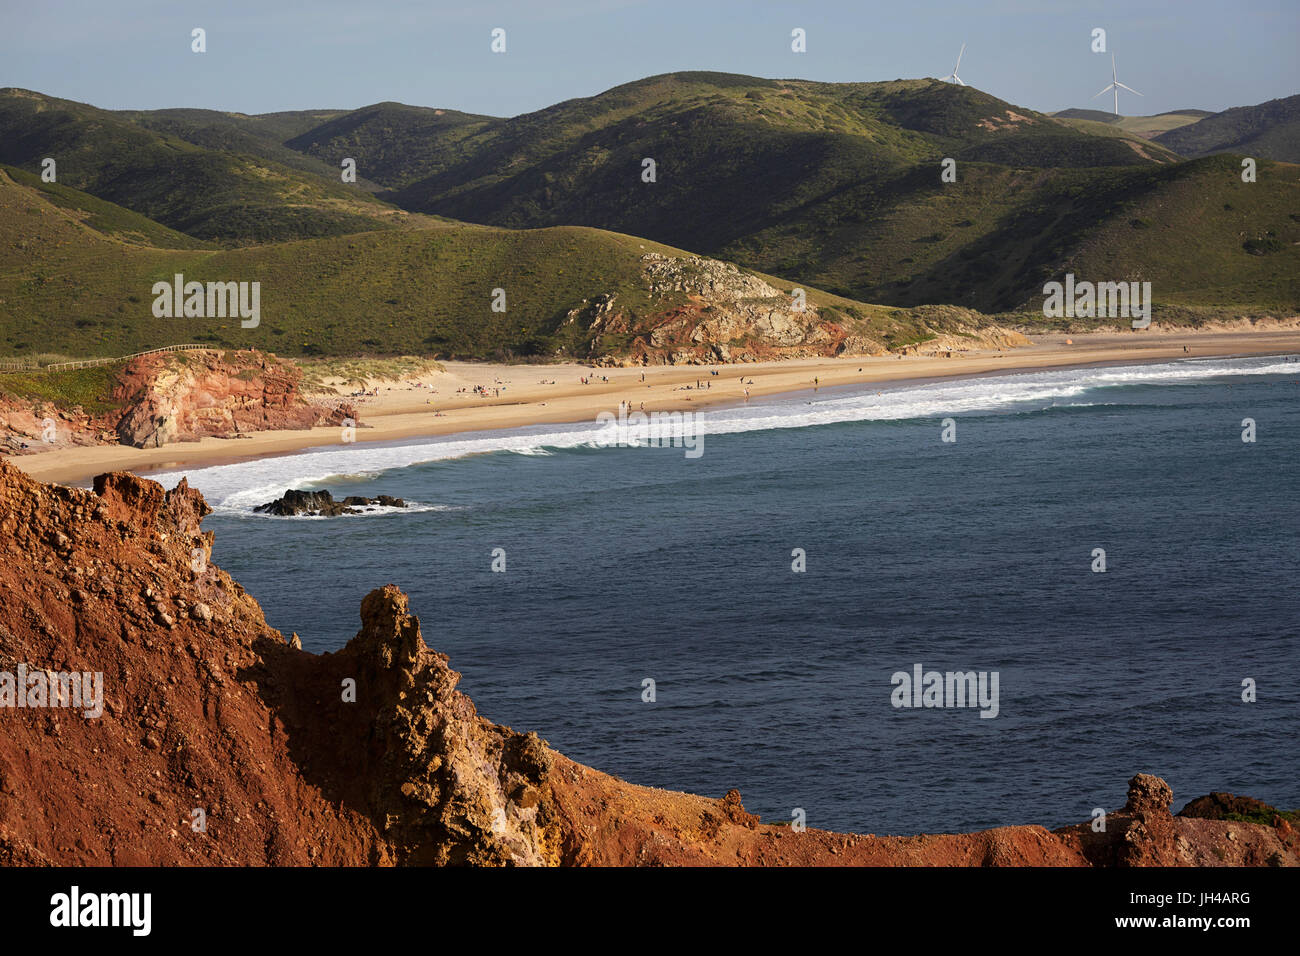 Praia do Amado beach, Algarve, Portogallo. Foto Stock